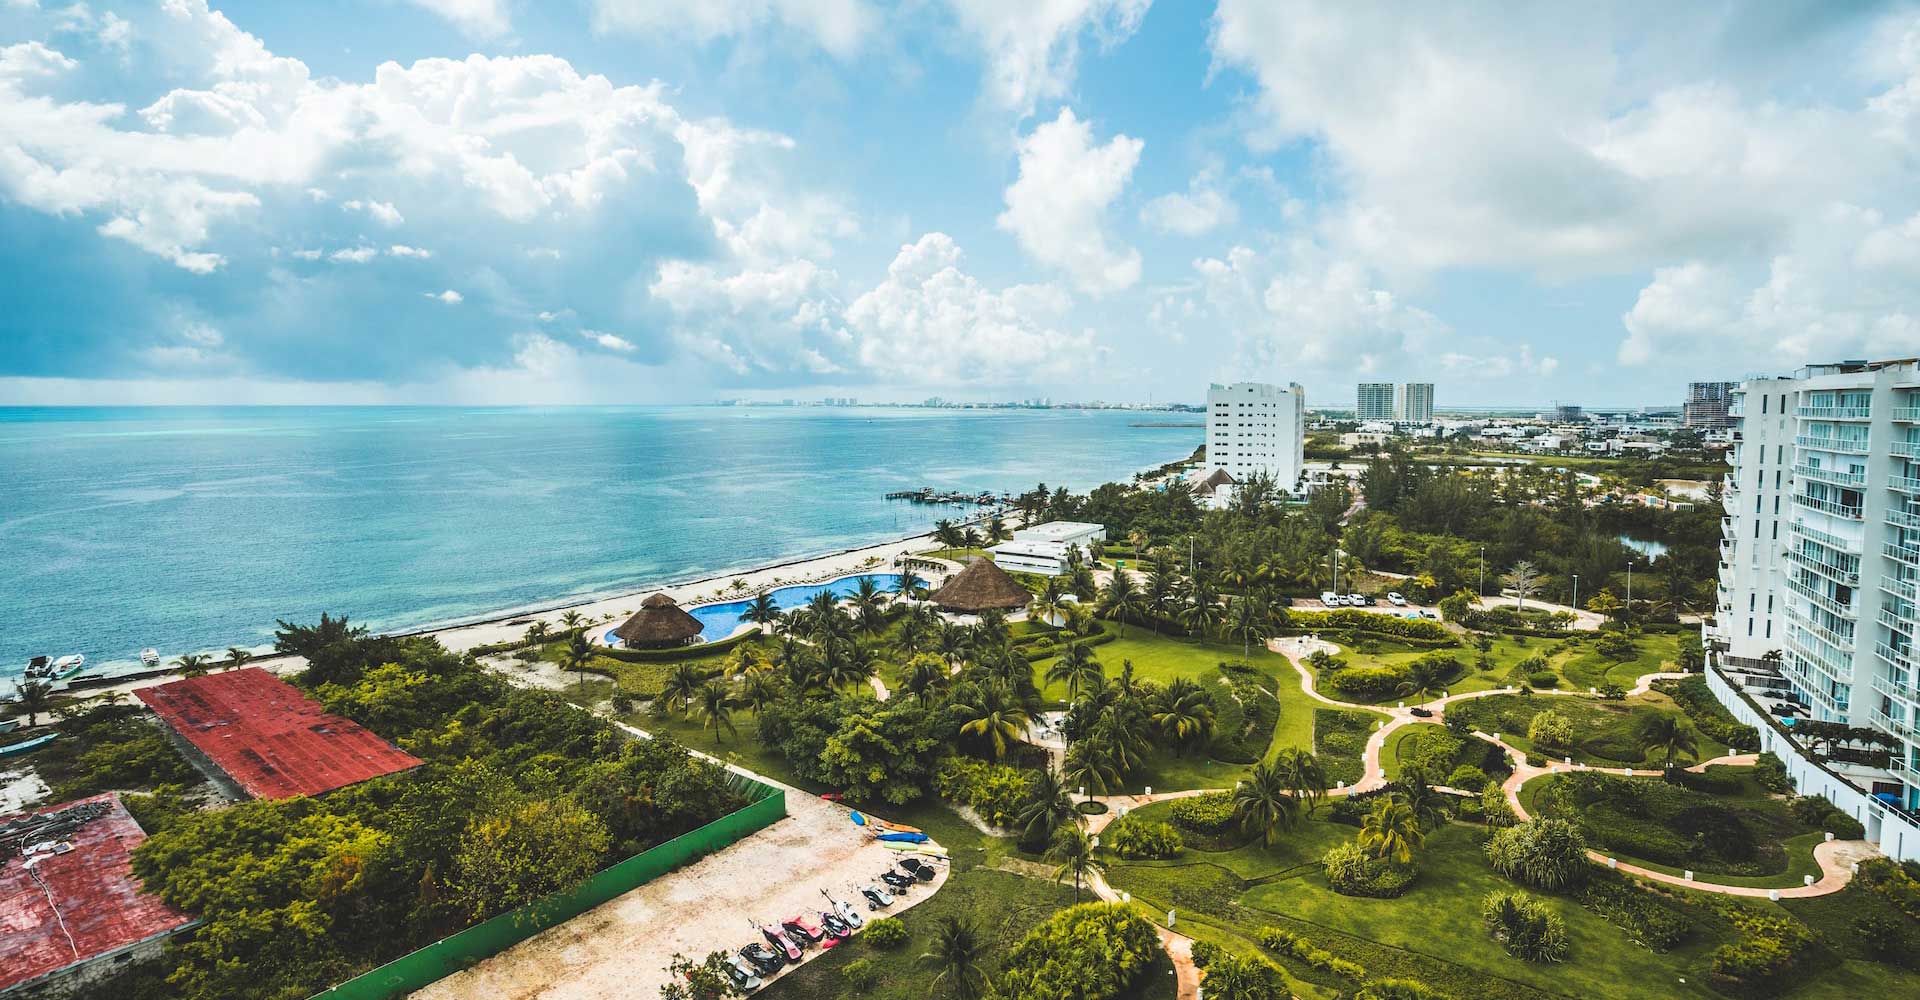 Zona hotelera Cancun Mexico